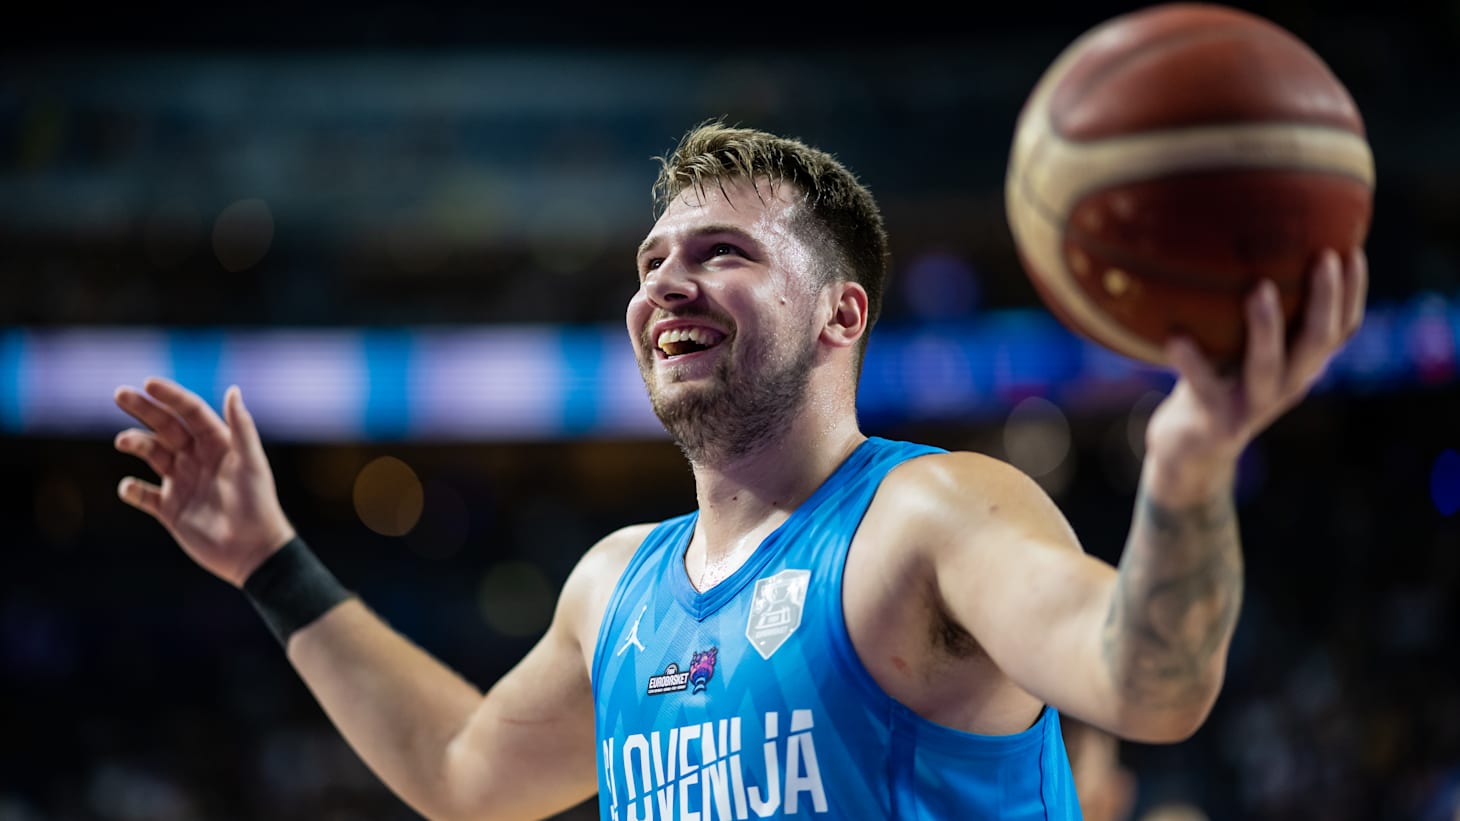 Slovenia announces final 12-man roster for FIBA World Cup / News